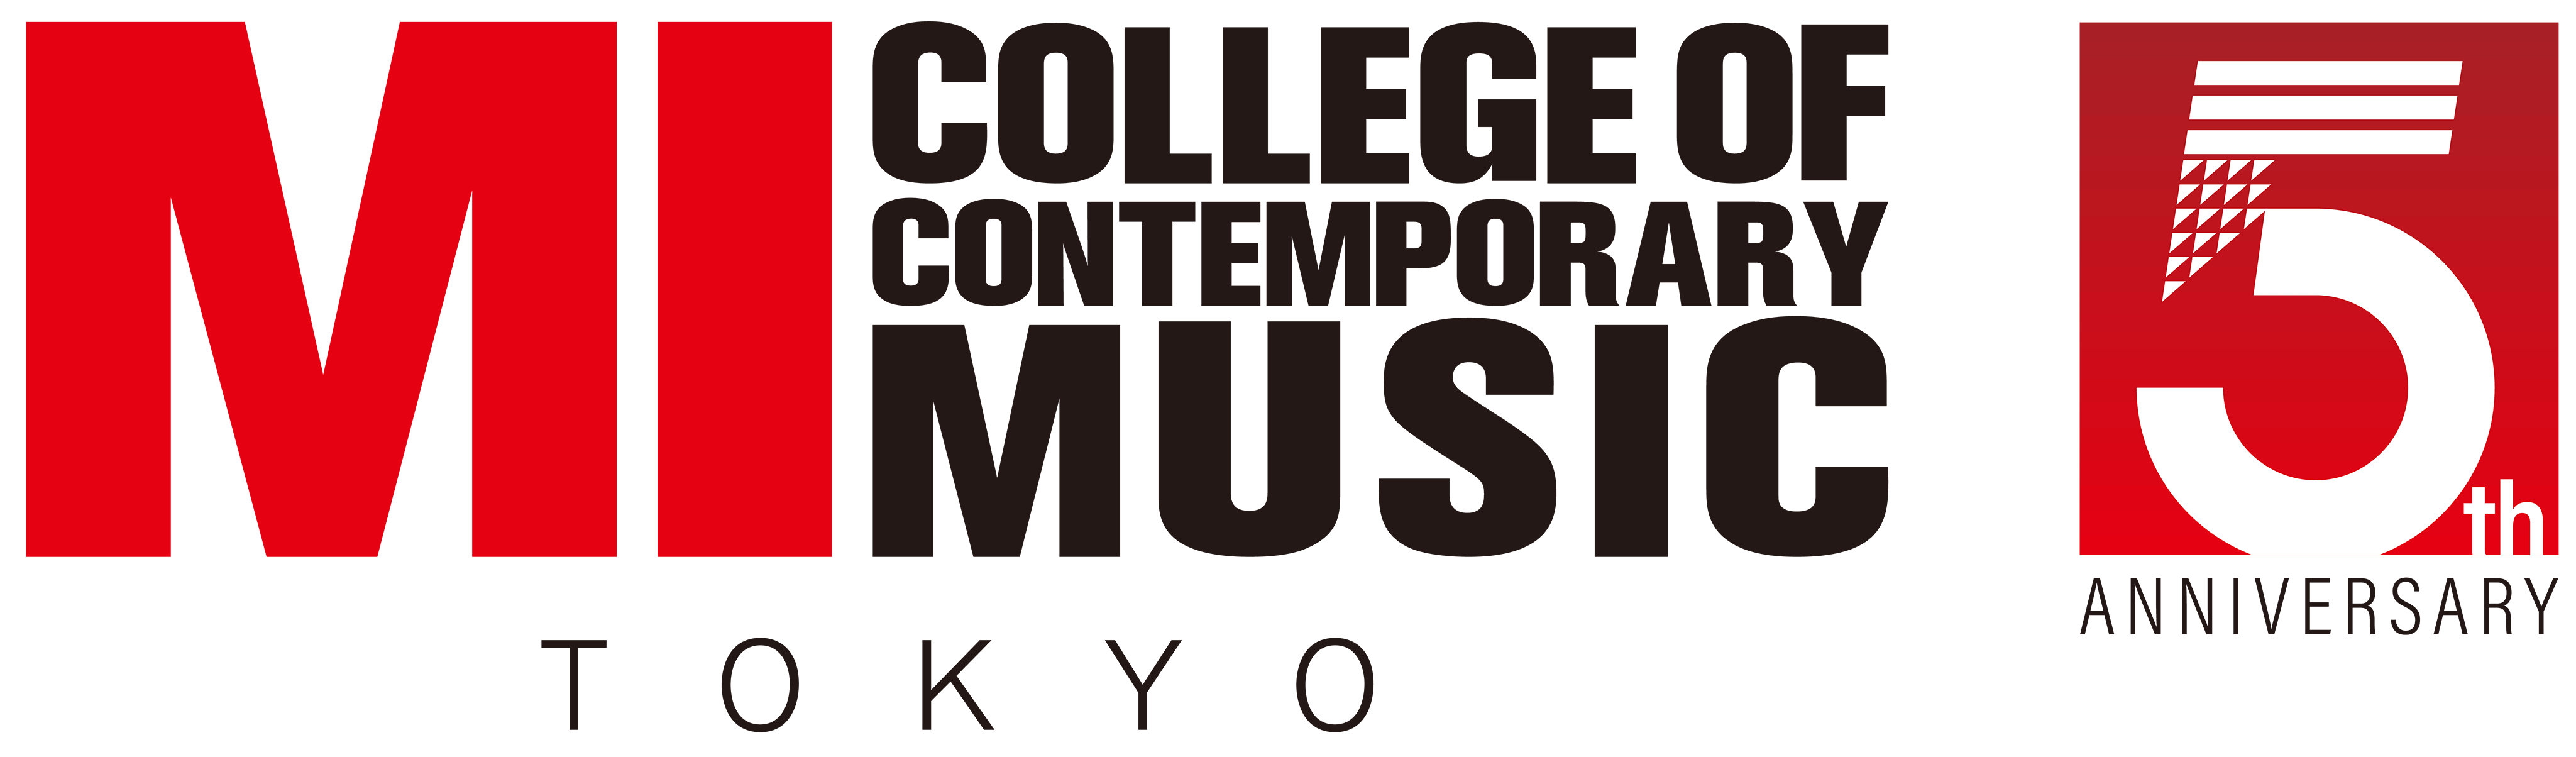 MI COLLEGE OF CONTEMPORARY MUSIC TOKYO